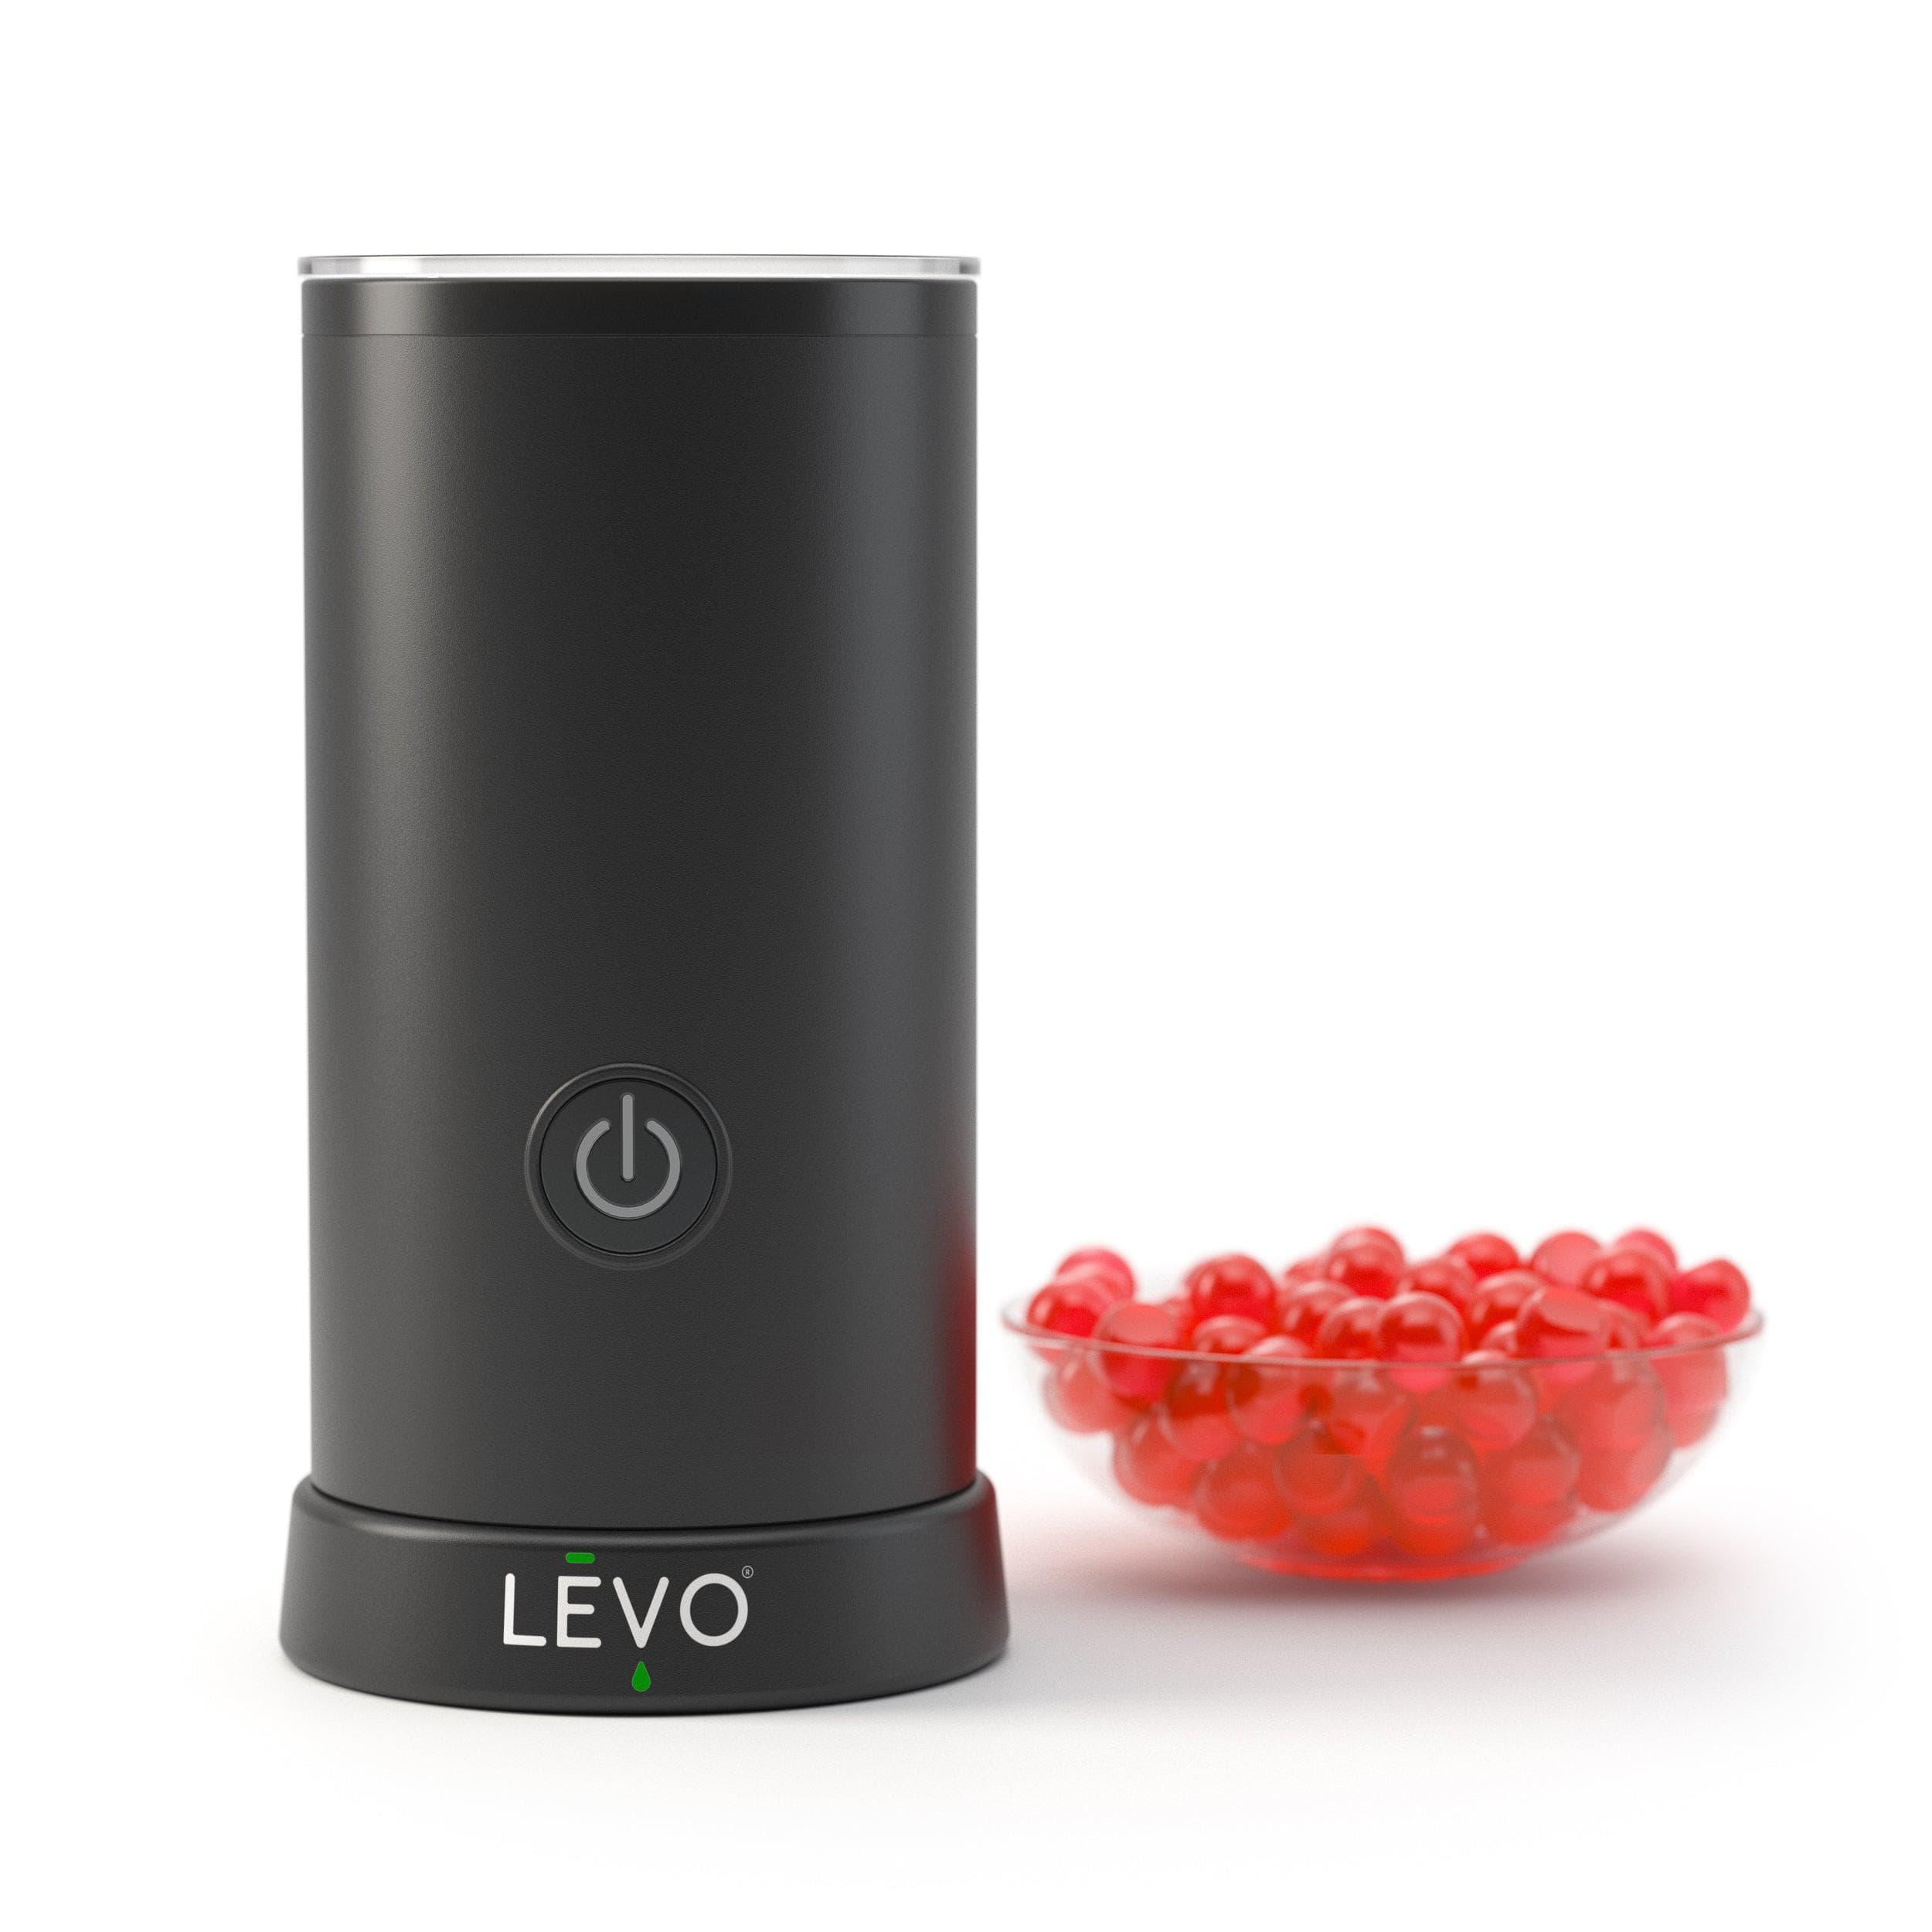 LEVO: New Gummy Mixer = Perfect Gummies Every Time